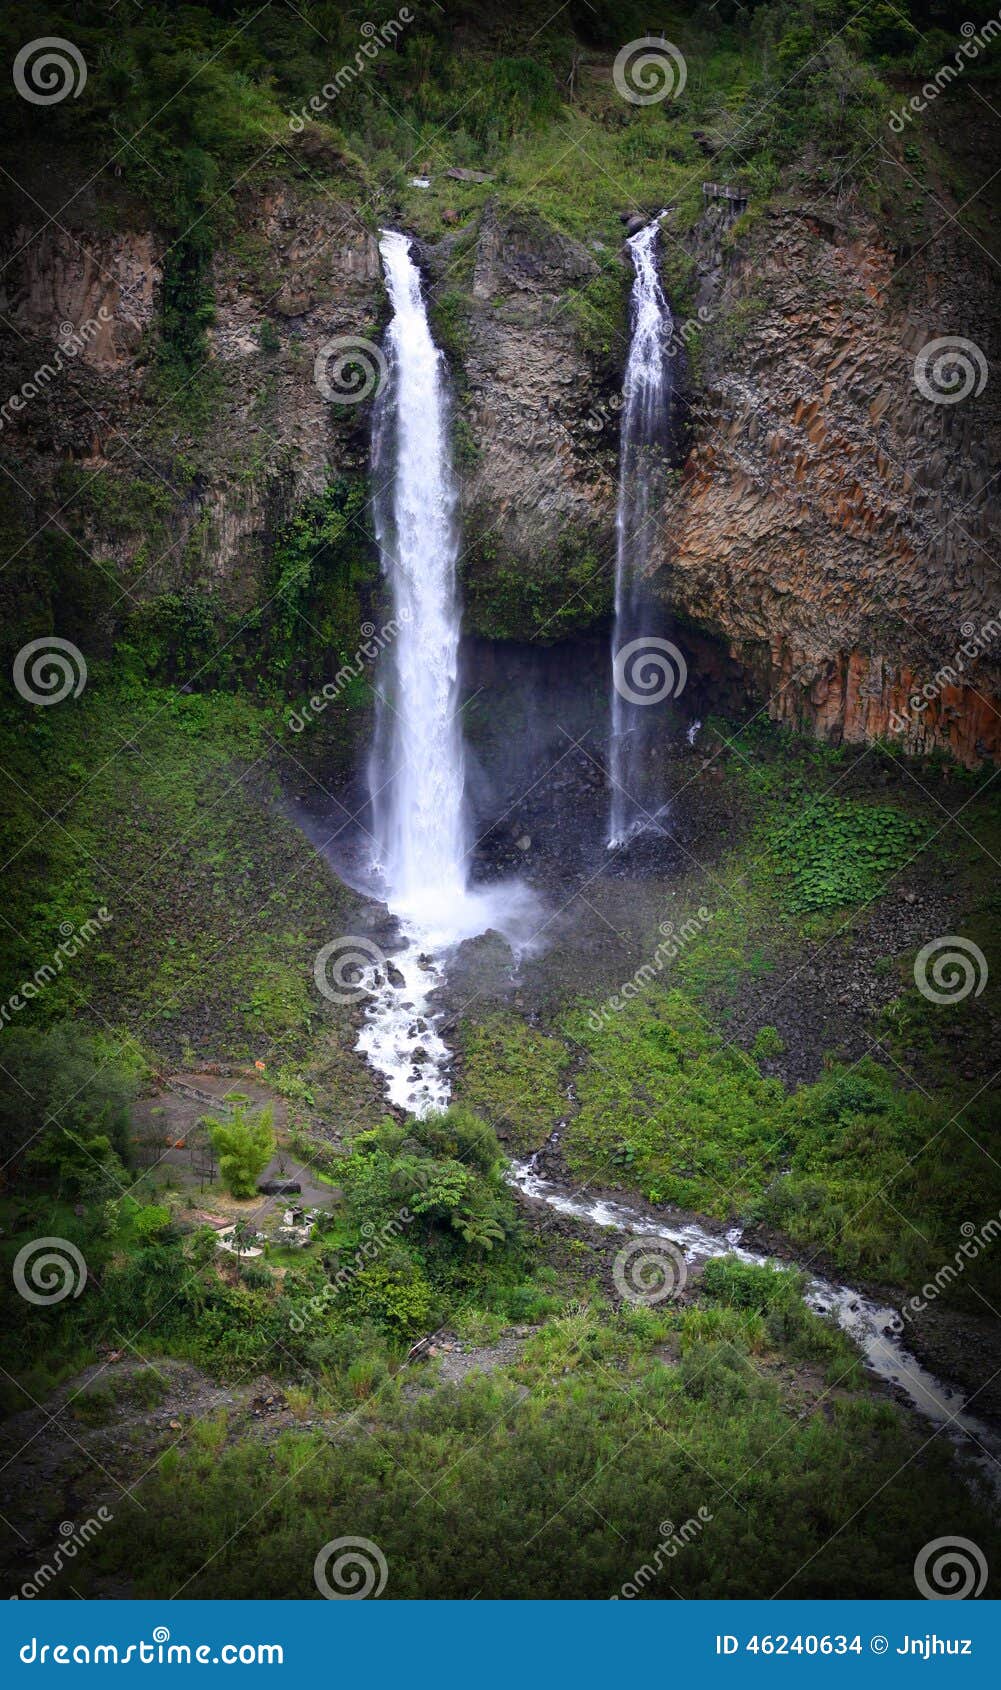 amante de la novia loving girlfriend waterfall, twin fall in ecuador